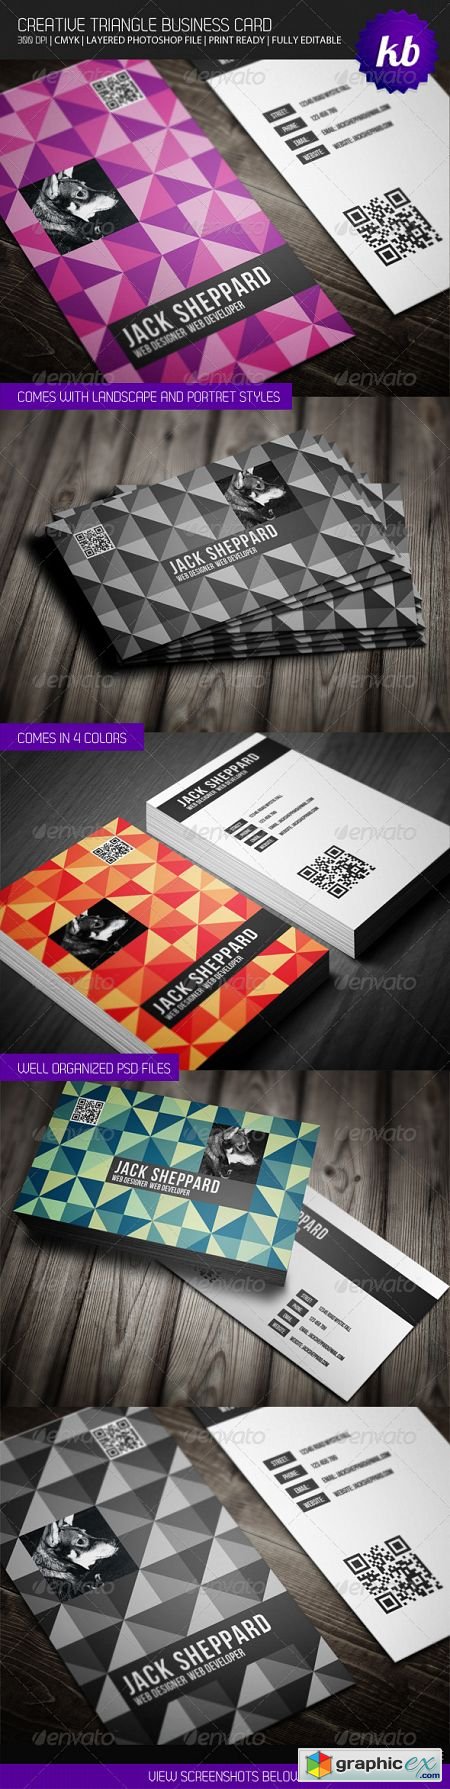 Creative Triangle Business Card